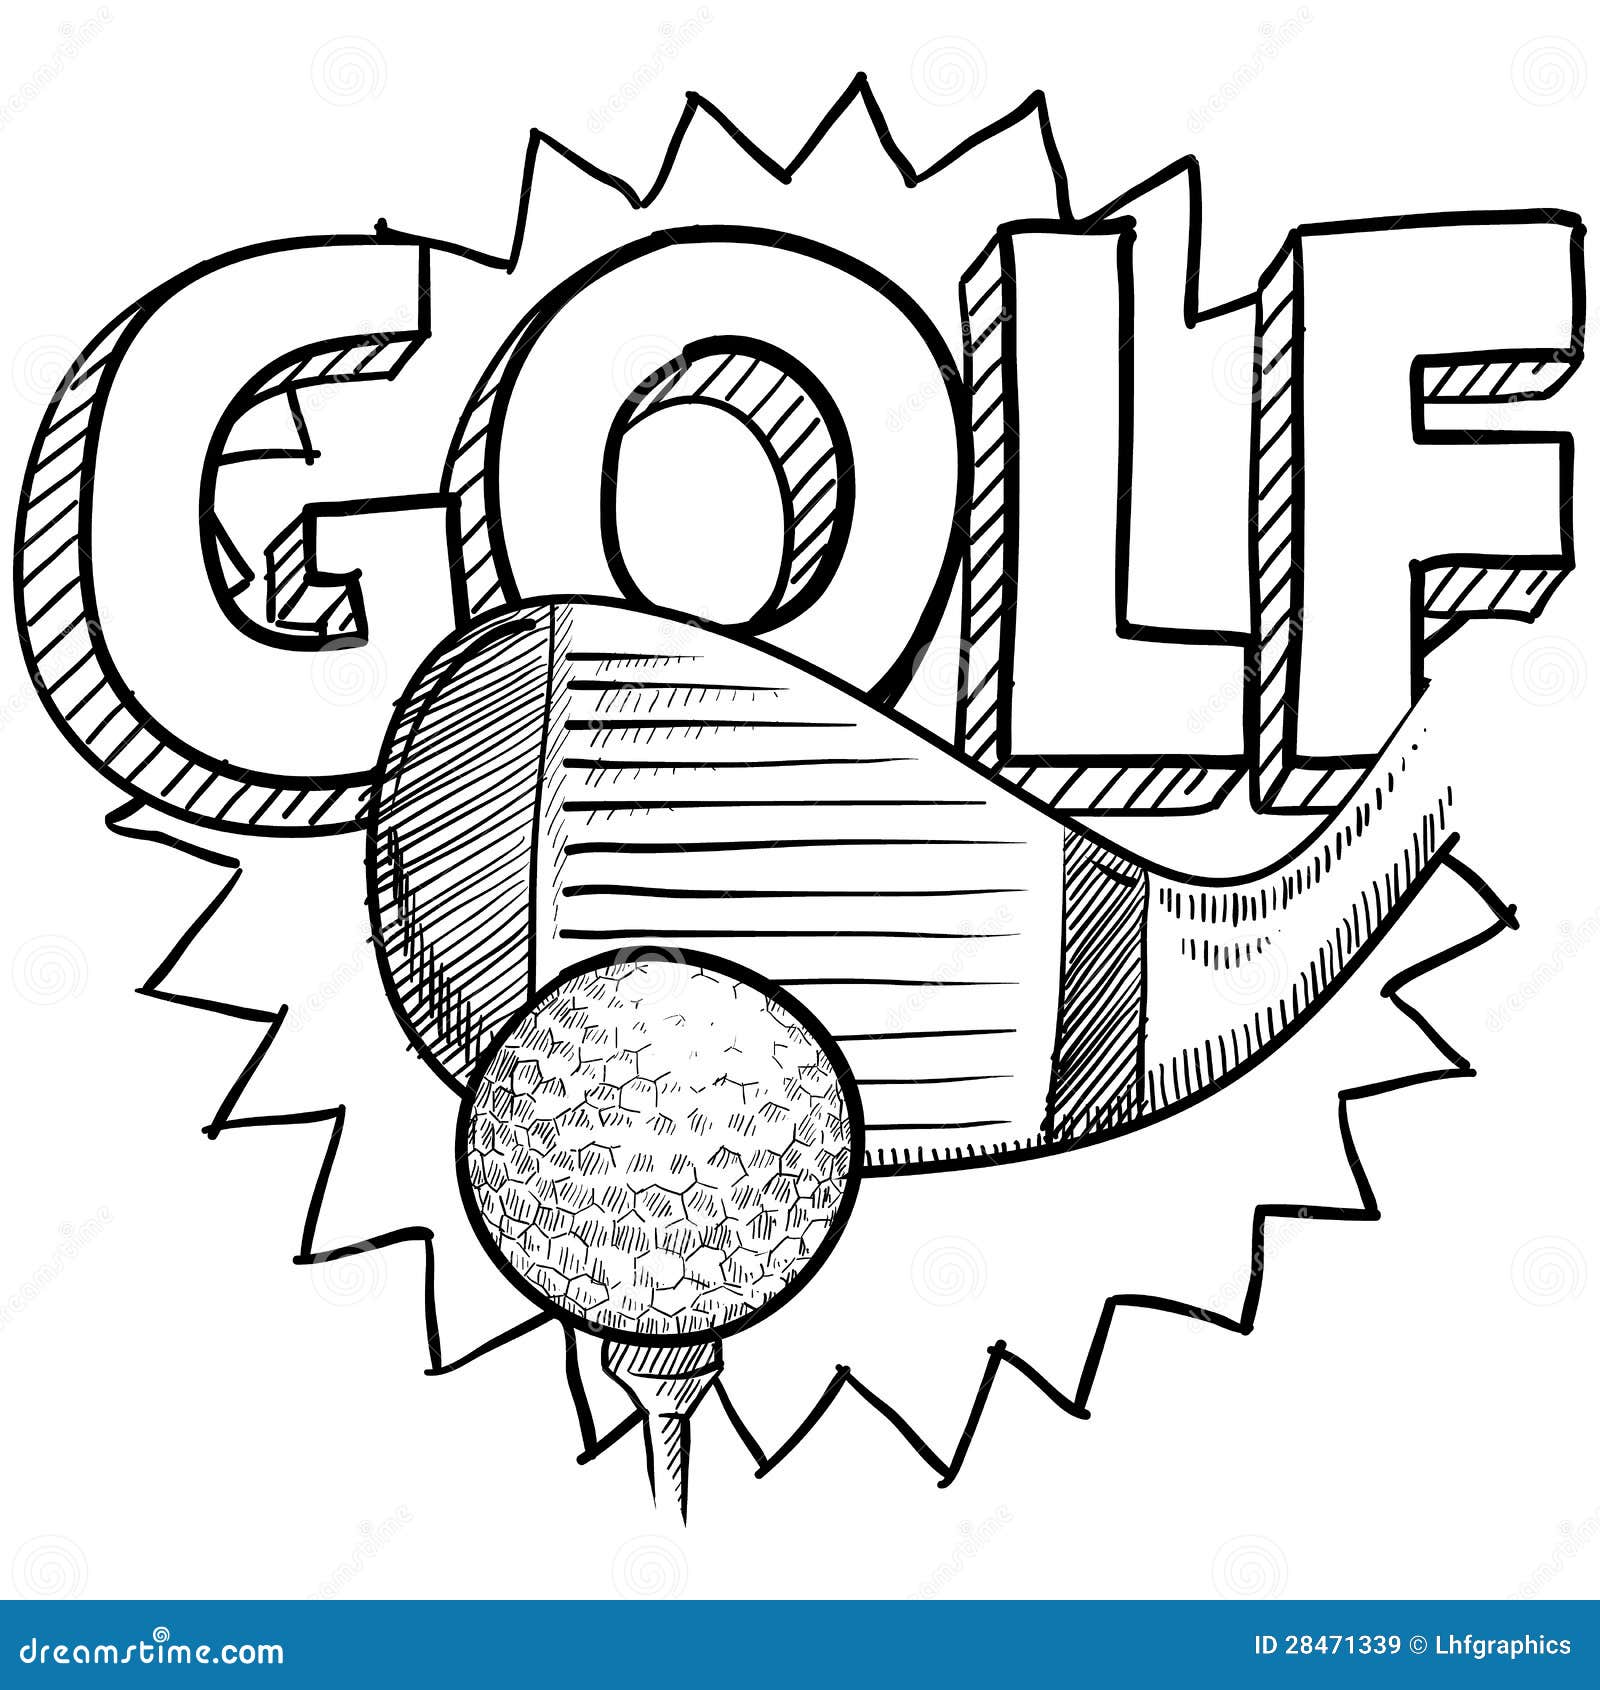 Premium Vector | Sketch male golf player line art